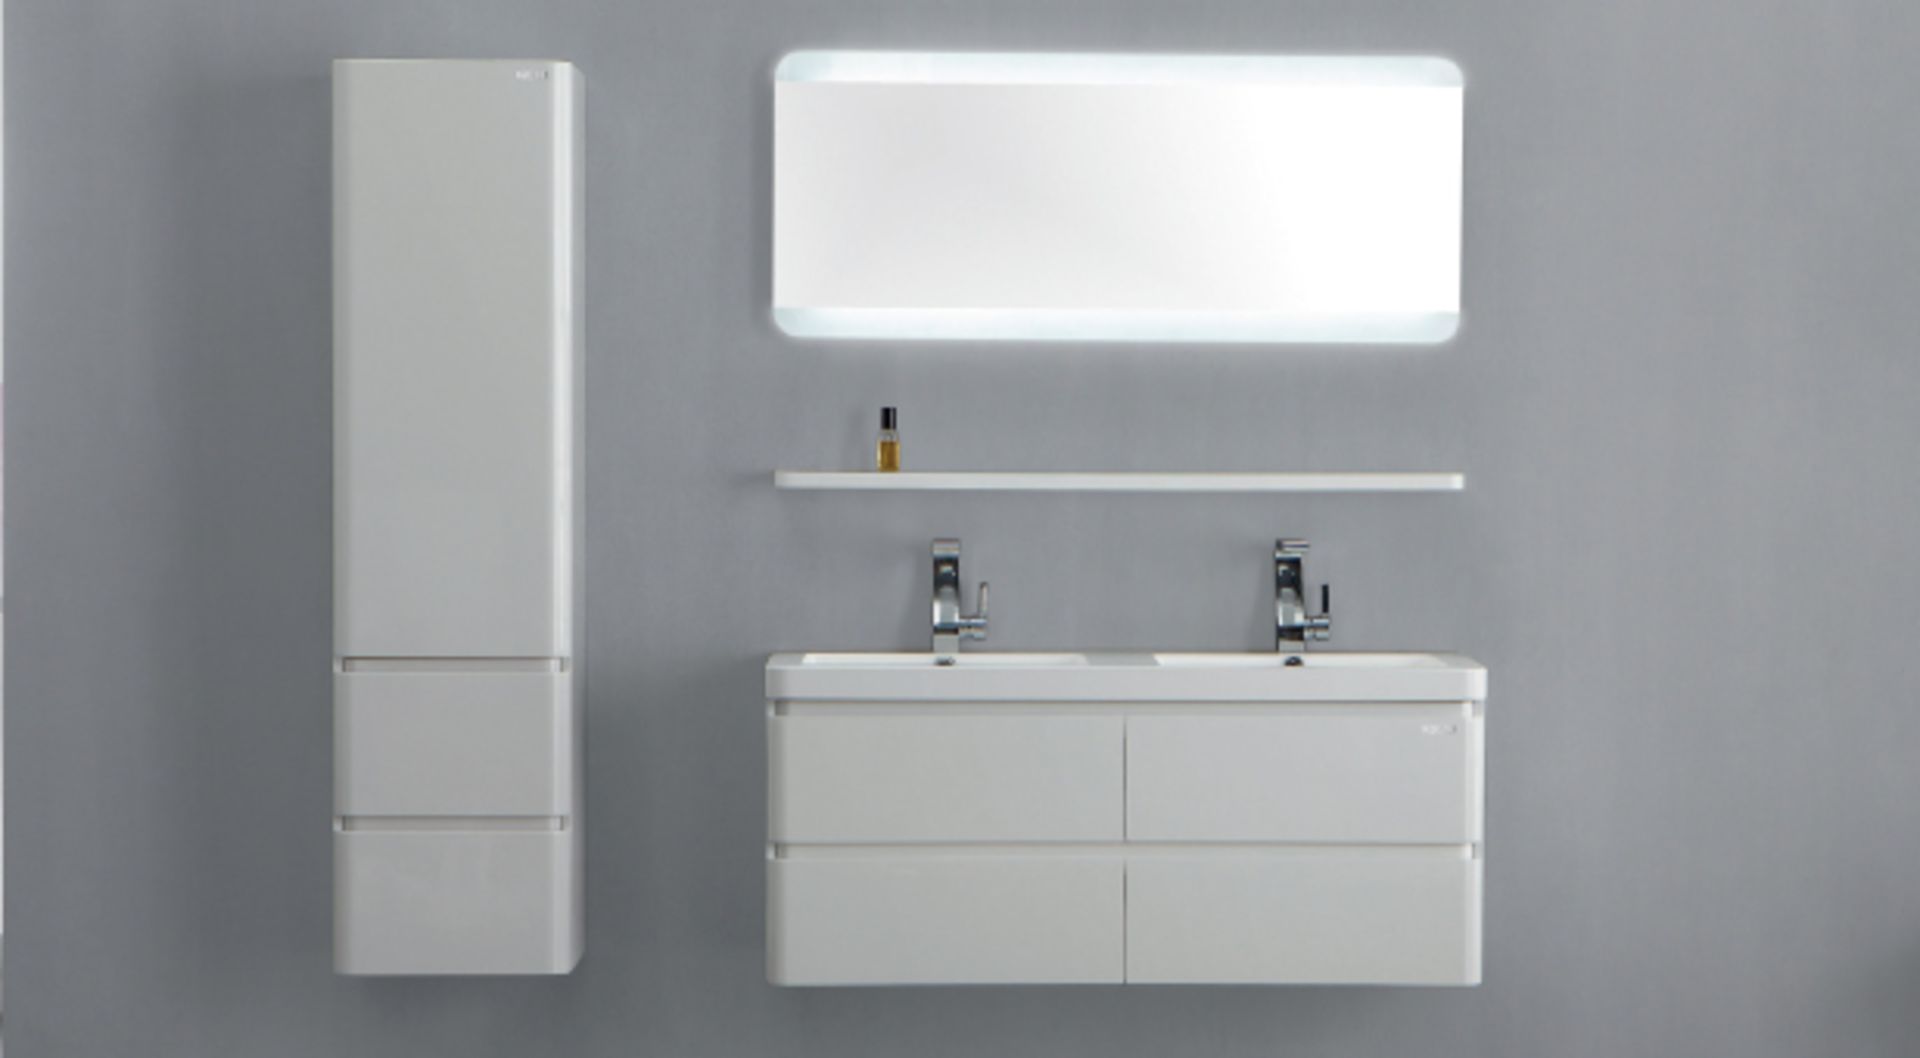 1 x Stylish Bathroom Edge Back-lit Mirror 100 - B Grade Stock - Ref:AMR11-100 - CL170 - Location: